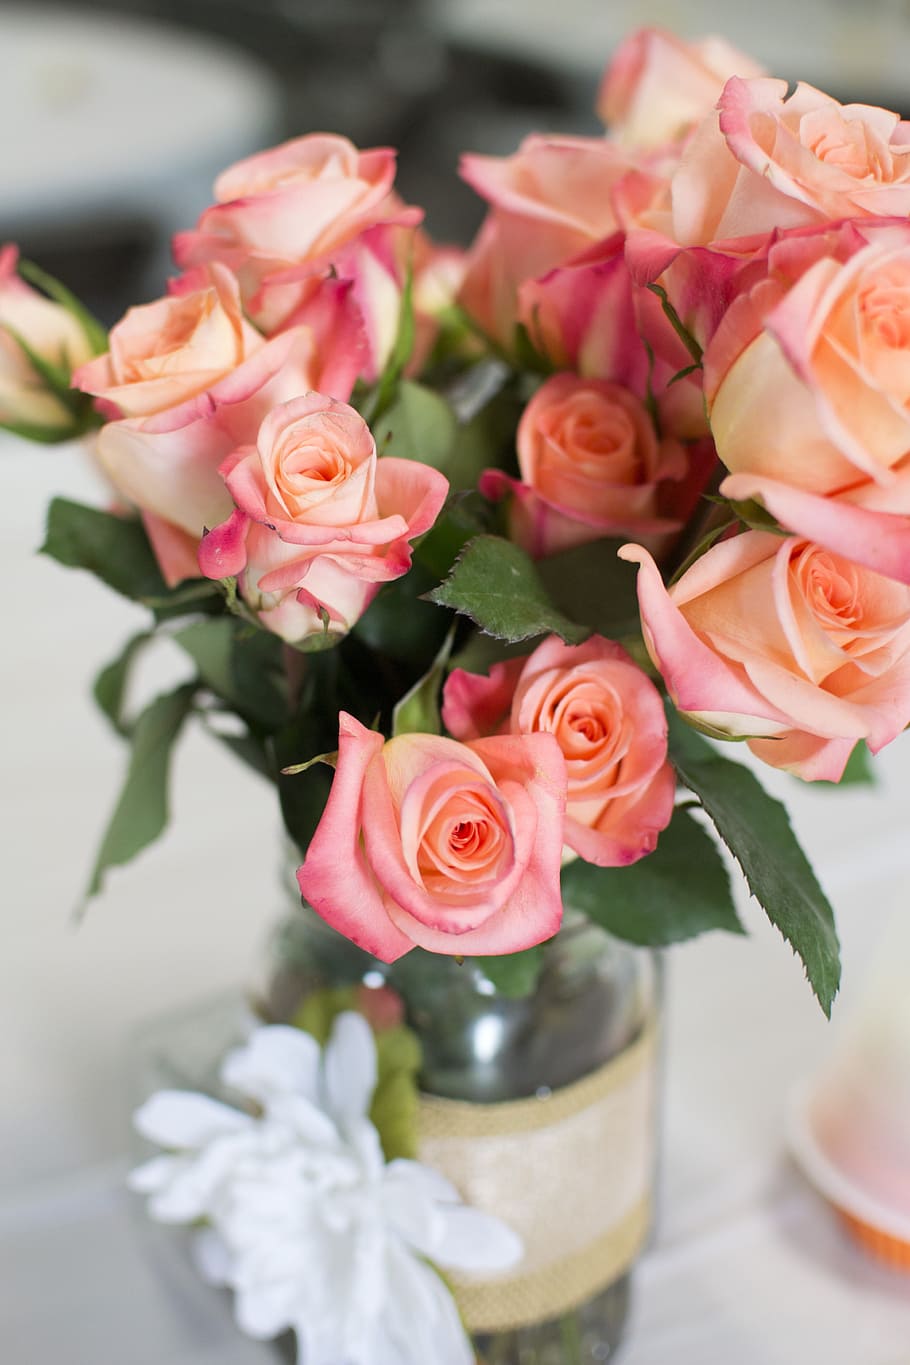 bouquet, pink, roses, glass vase, glass, vase, flower, wedding, wedding flowers, love